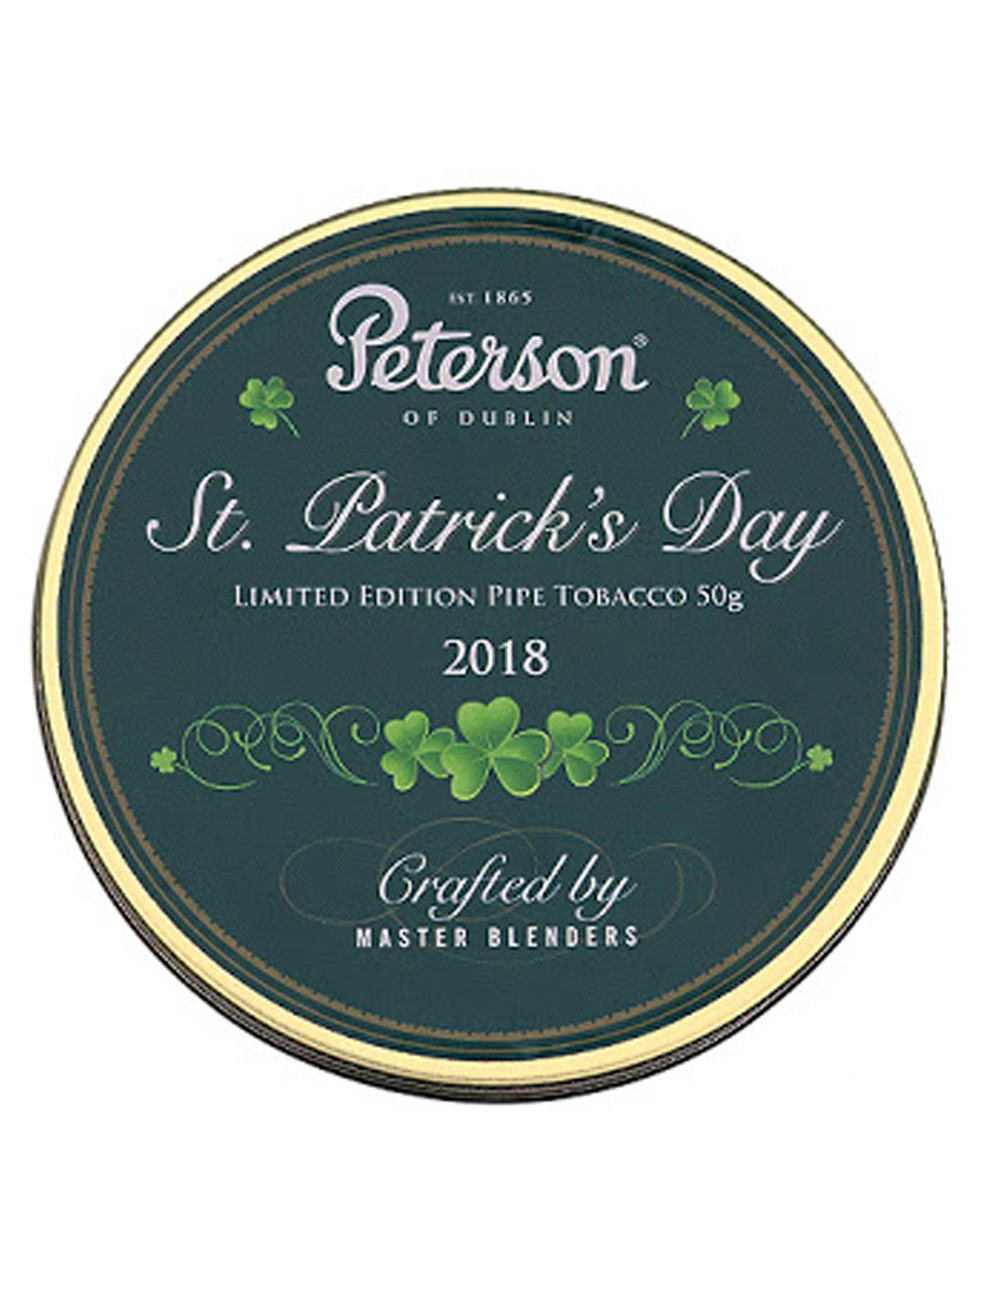 St. Patrick's day 2018